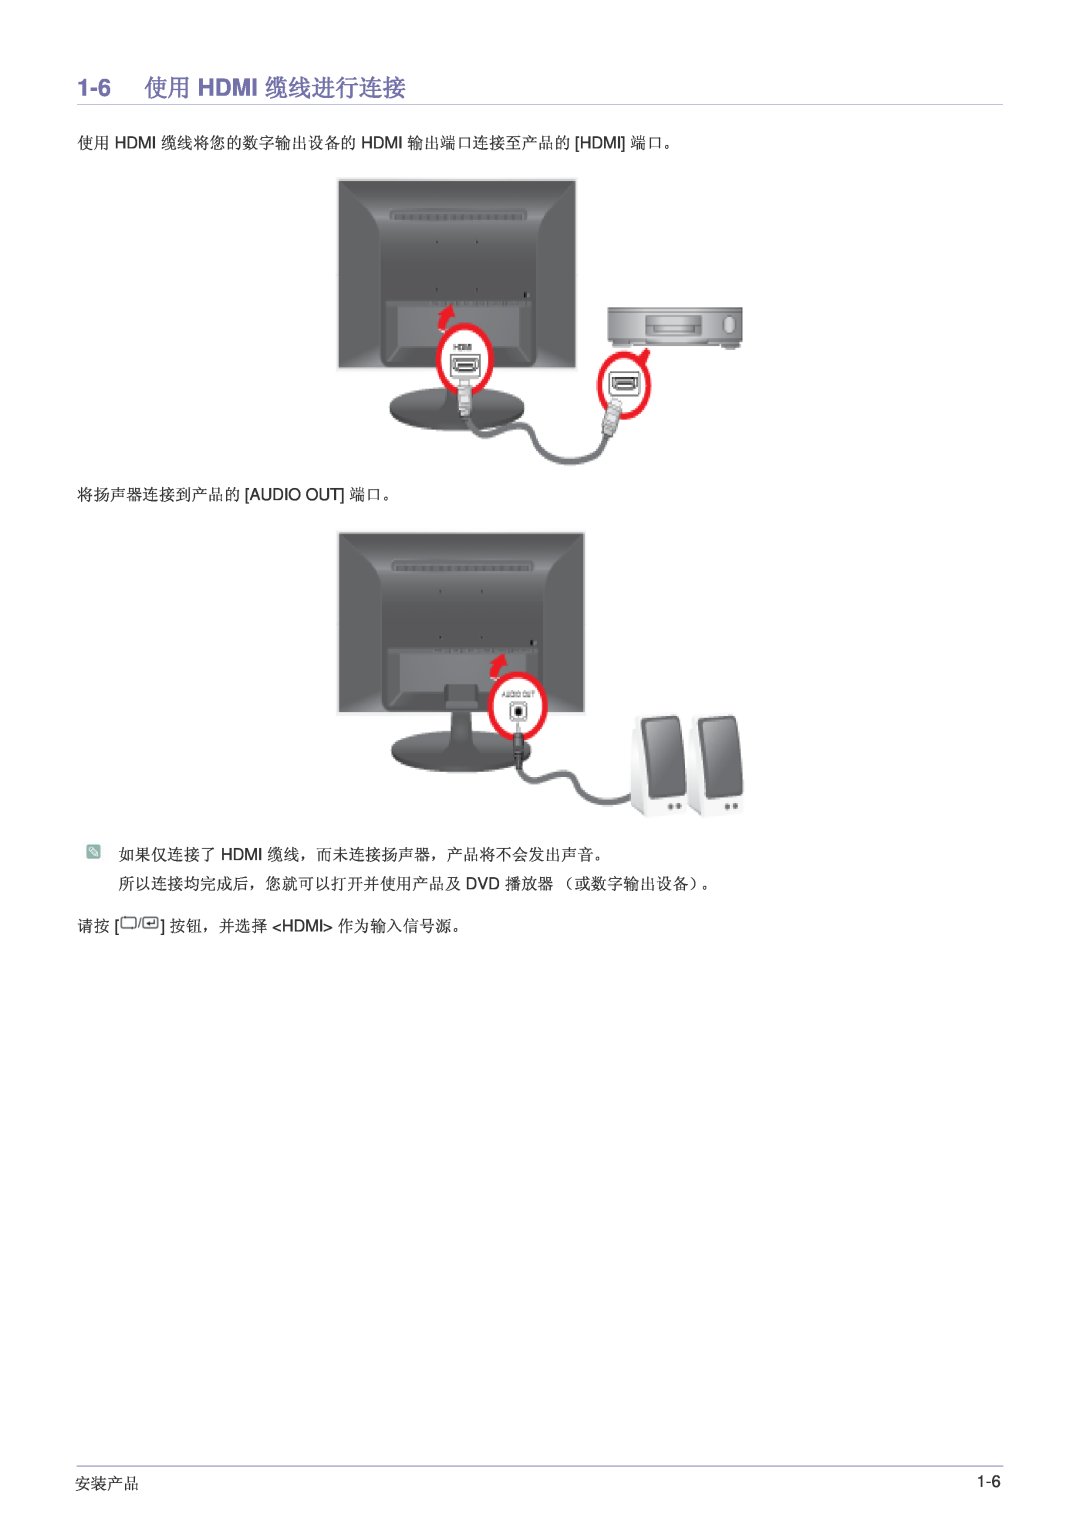 Samsung LS24LRZKUV/EN manual 1-6 使用 HDMI 缆线进行连接, 使用 Hdmi 缆线将您的数字输出设备的 Hdmi 输出端口连接至产品的 Hdmi 端口。, 安装产品 